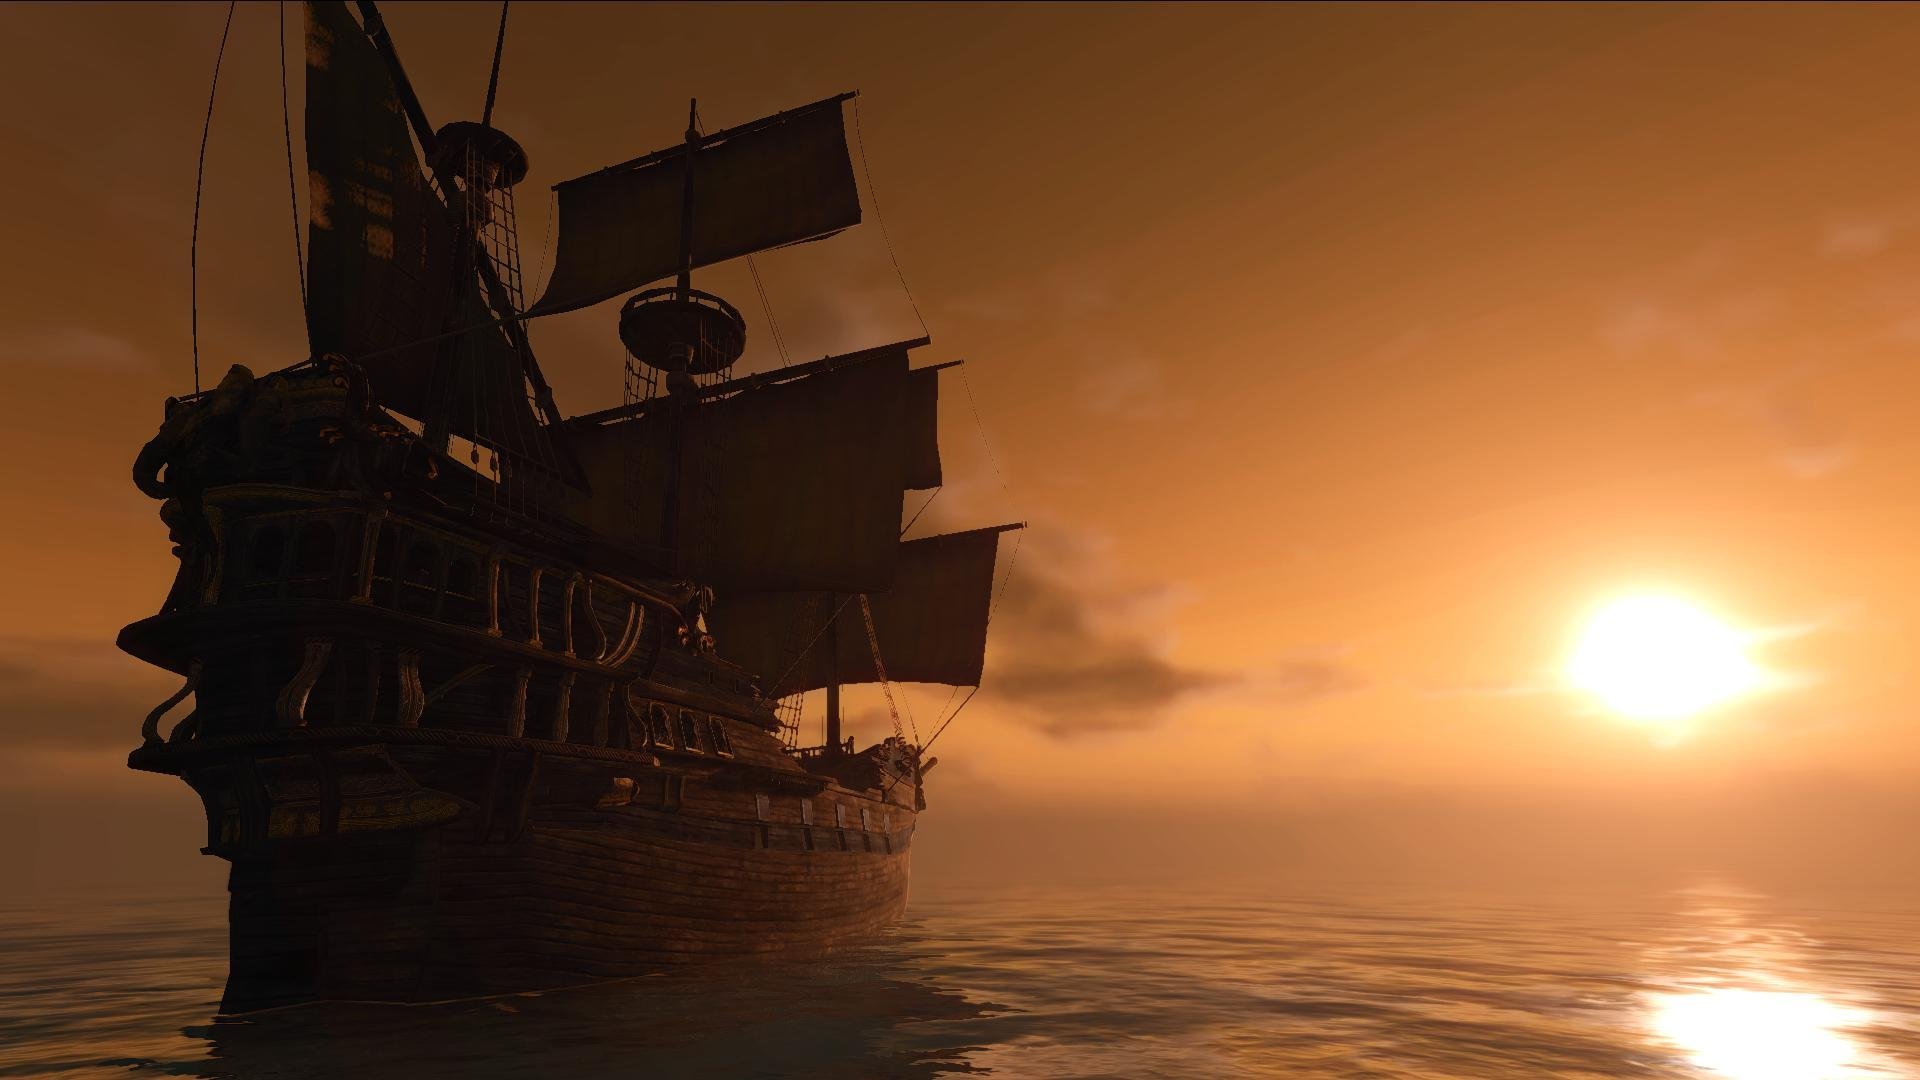 The pirate ship bdsm